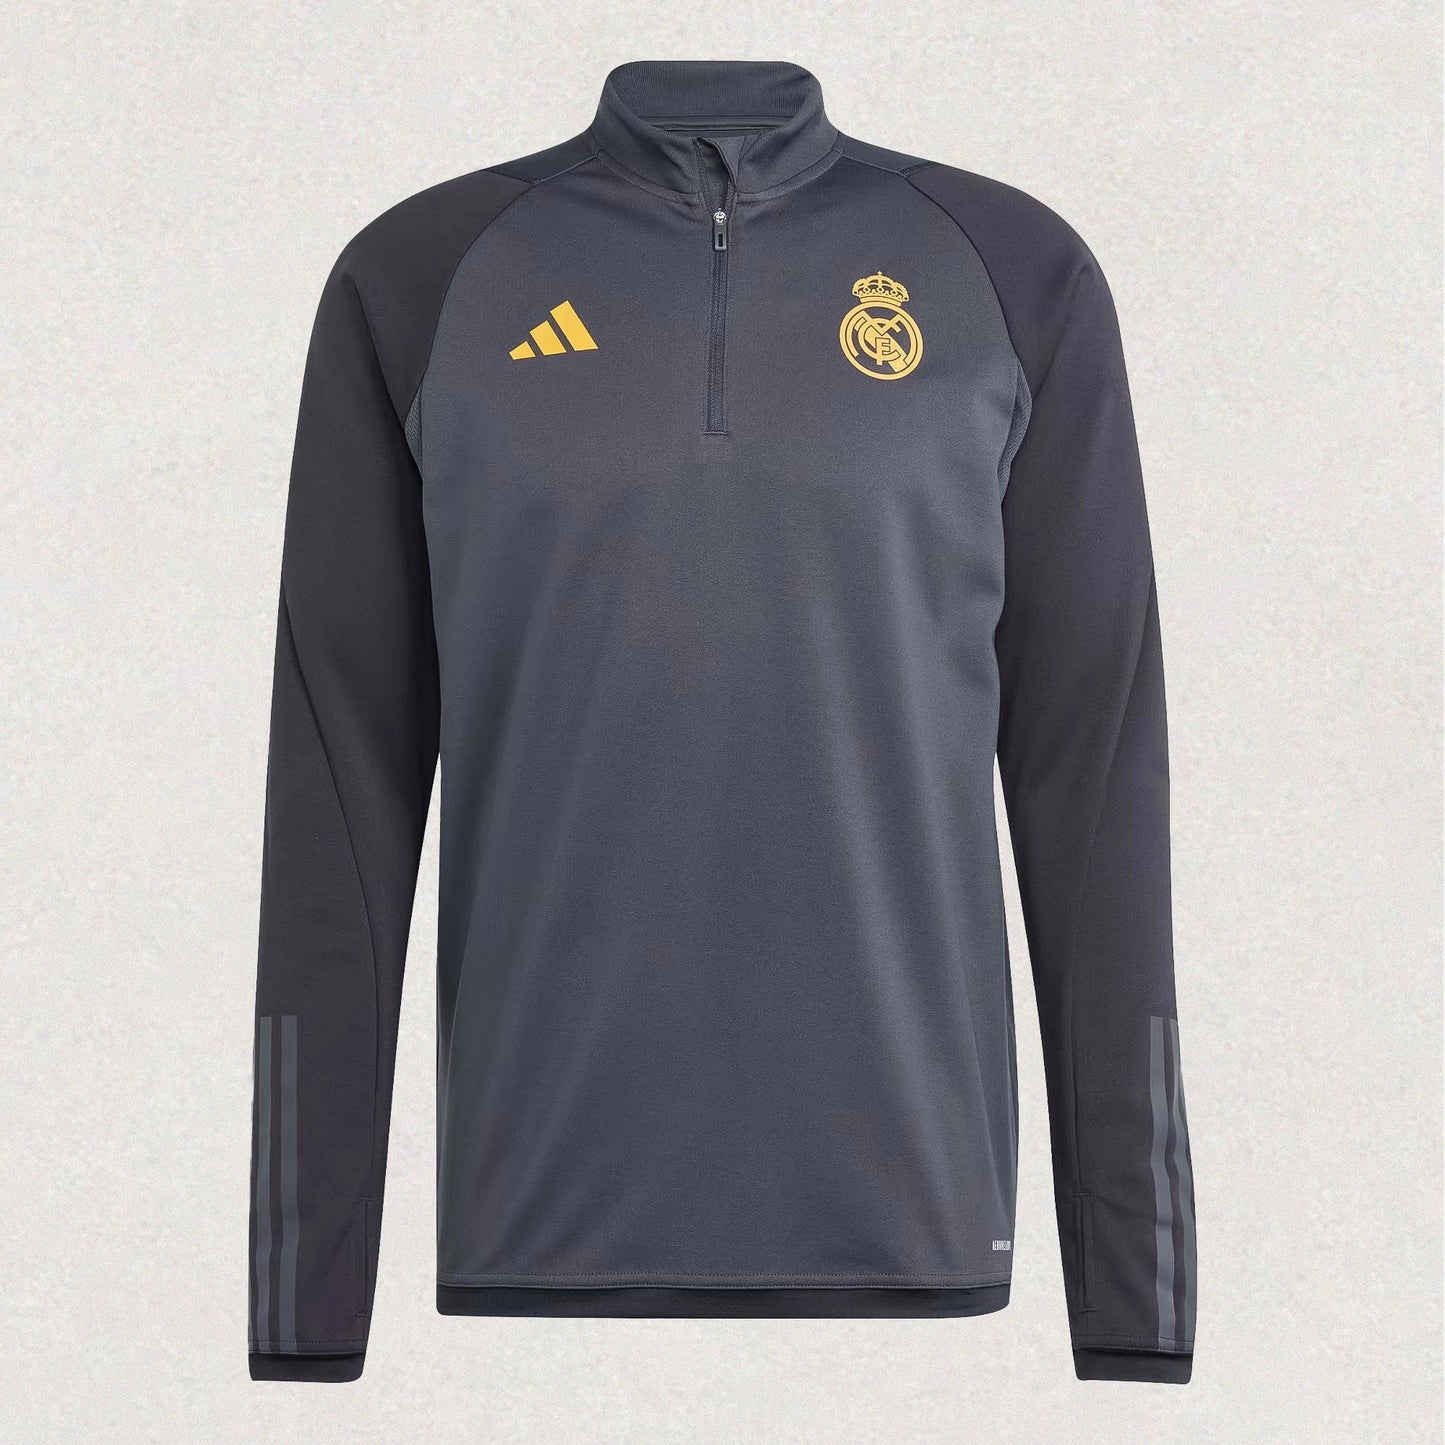 Real Madrid Tiro 23 Training Kit - Goal Ninety